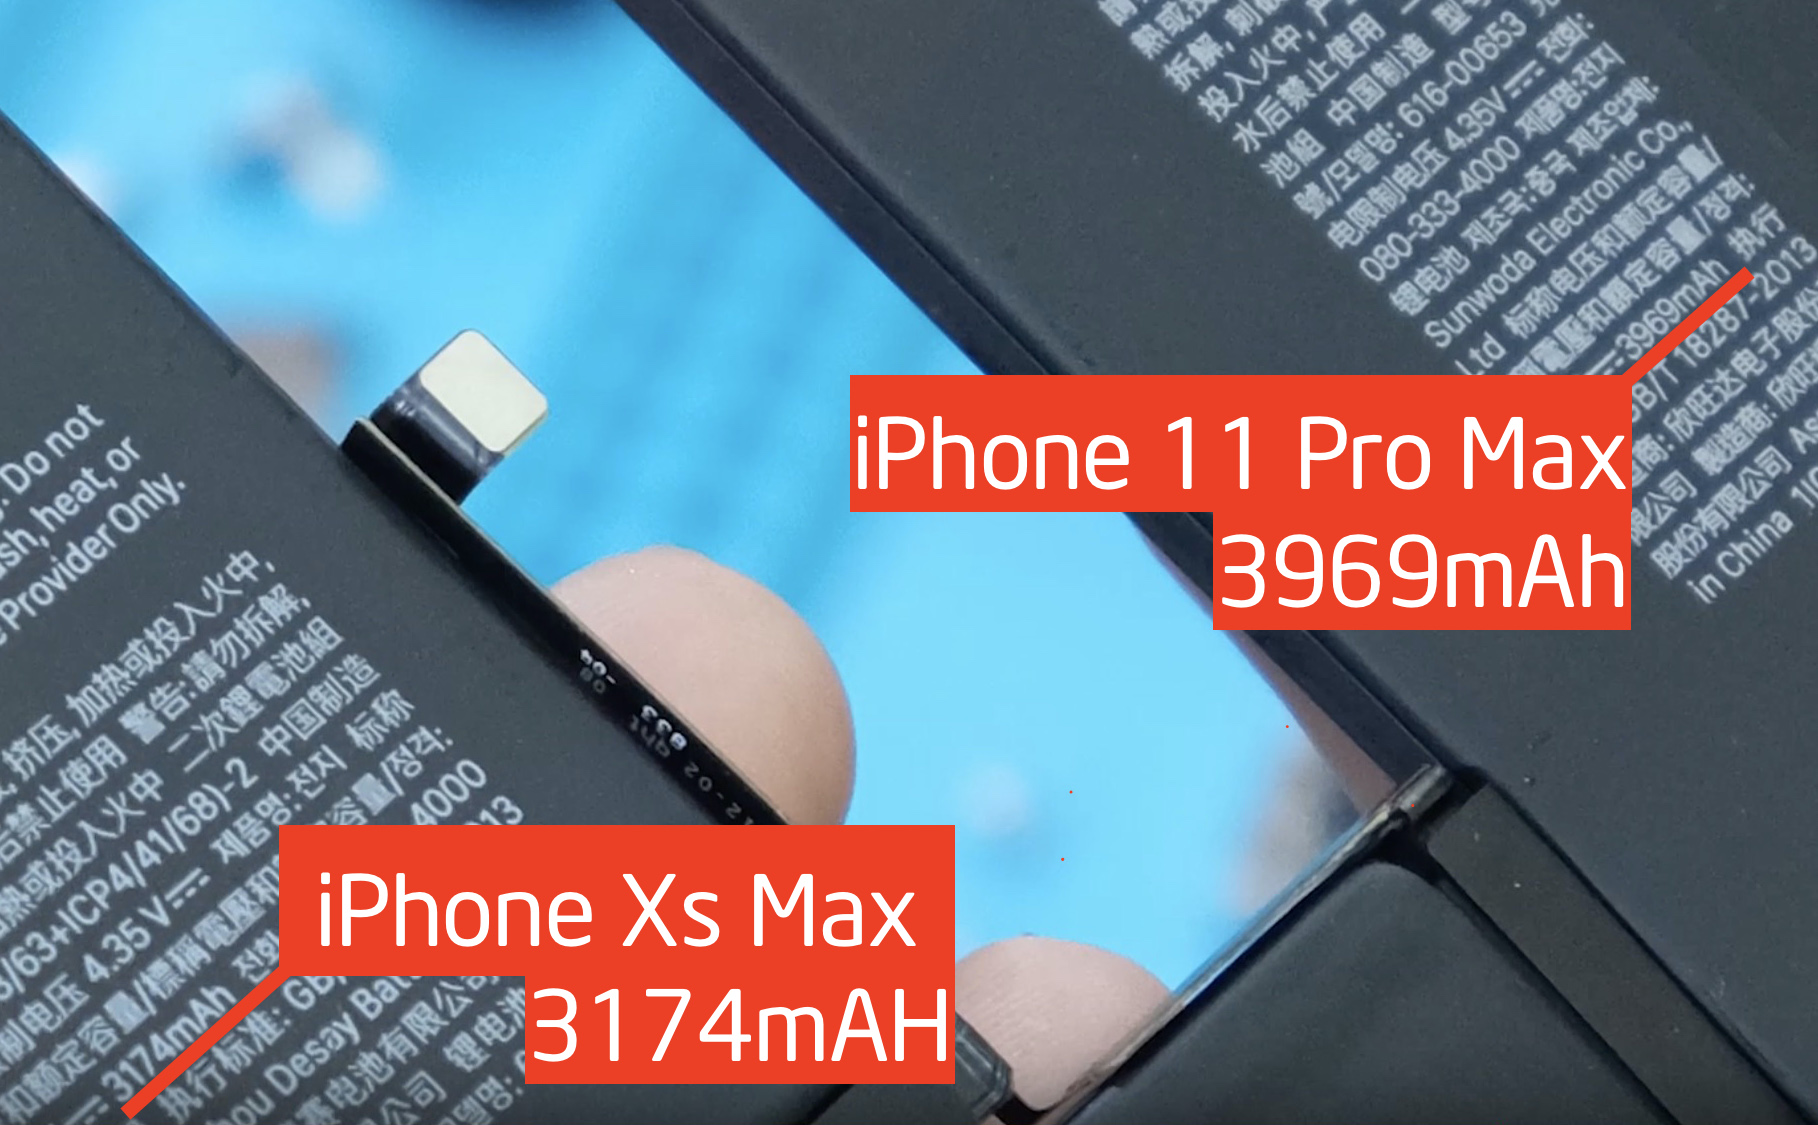 Pin iPhone 11 Pro Max 3969mAh so với 3174mAh trên Xs Max